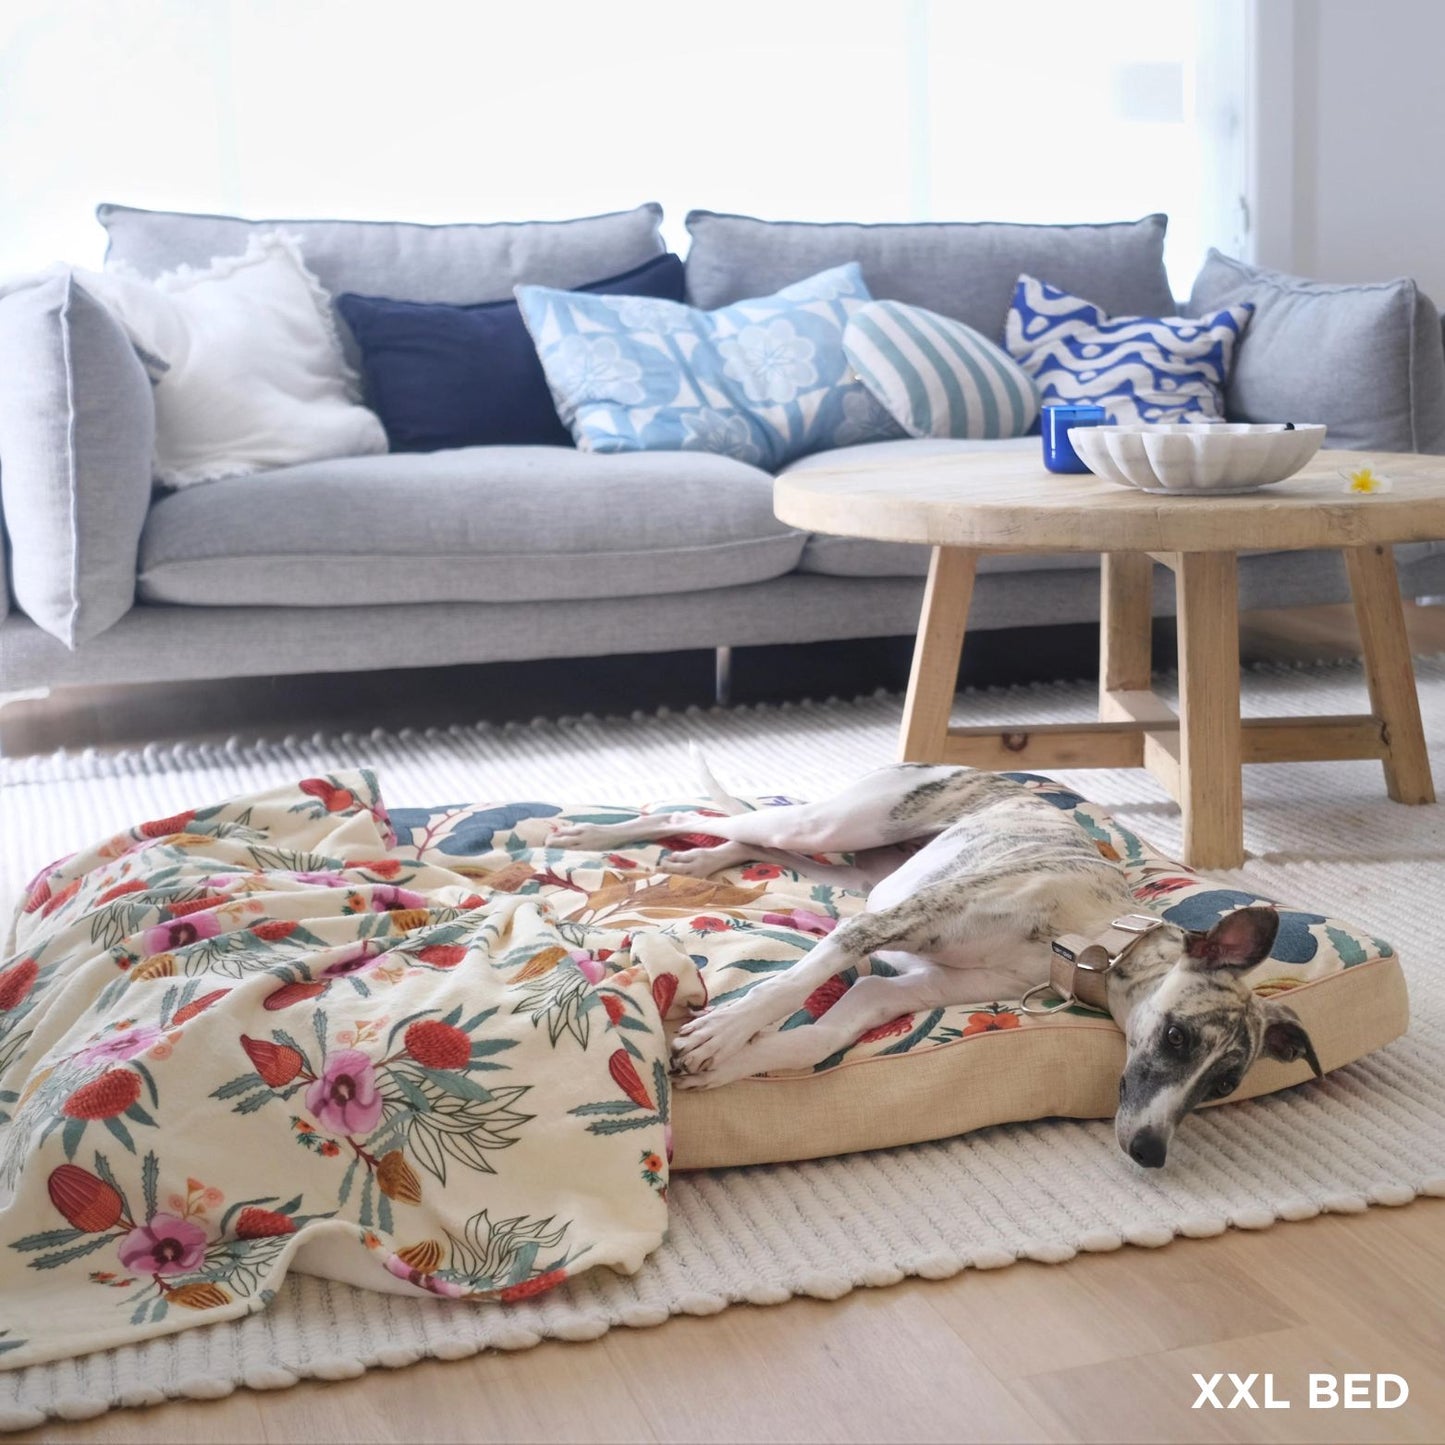 Indoor Dog Bed | Native Flora